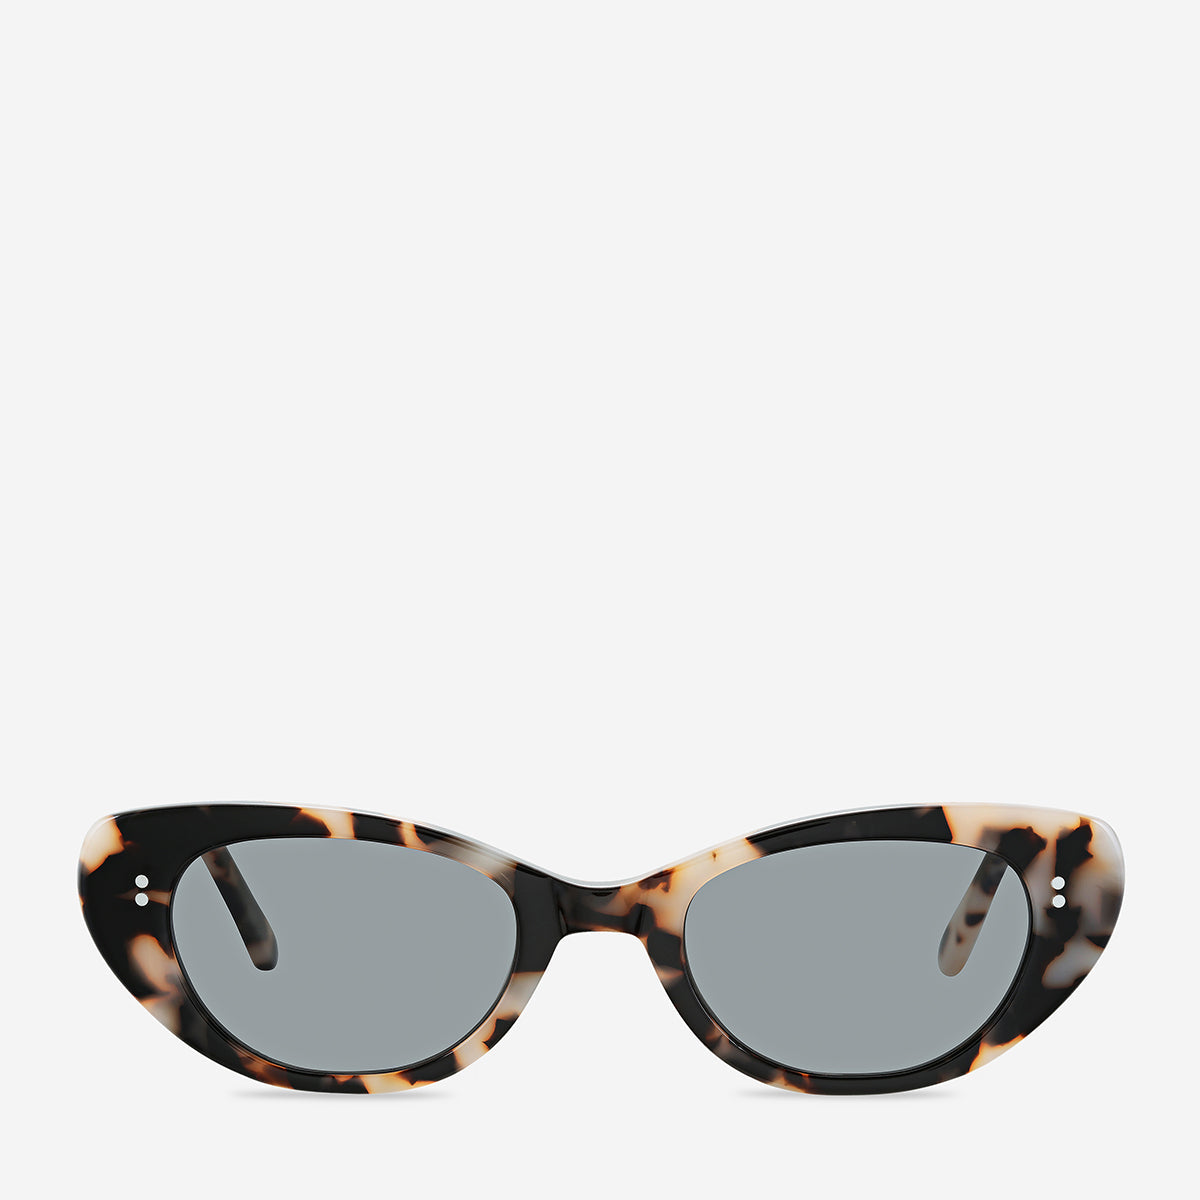 Wonderment Sunglasses in White Tort